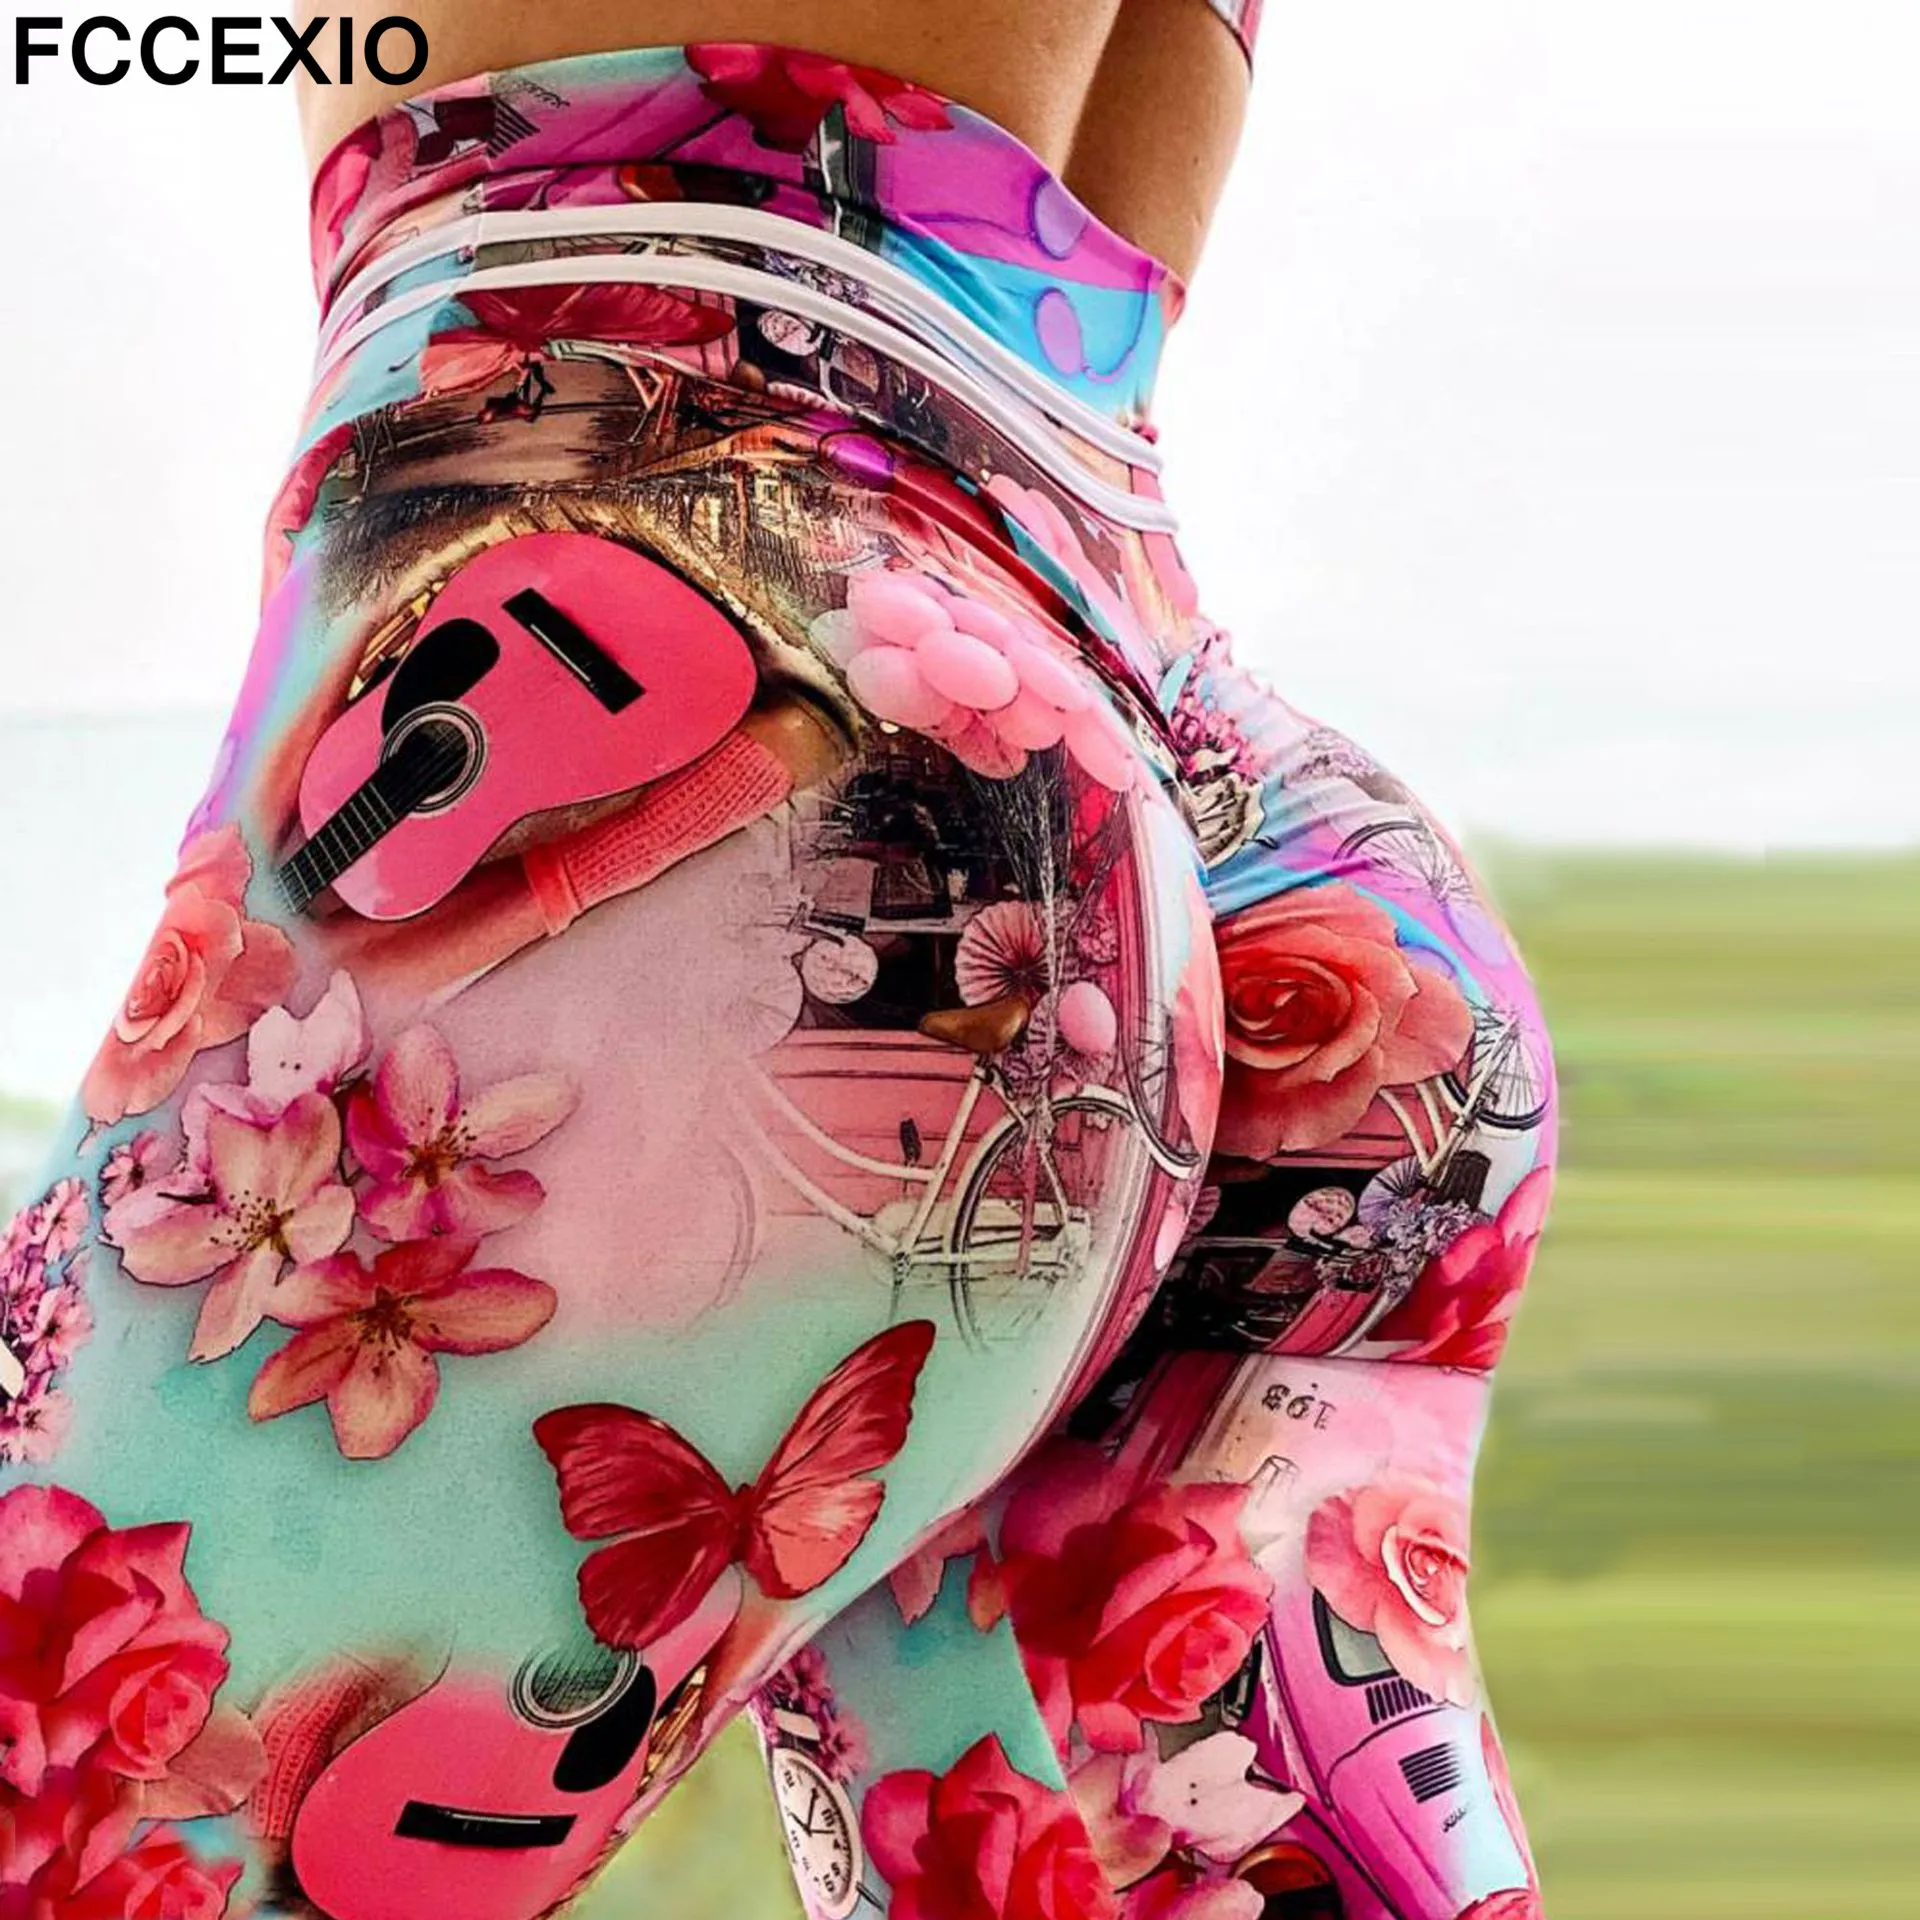 FCCEXIO 3D Print Women Leggings Pink Guitar Clock Tight Fitness Legins High Waist Long Pants Fashion Sexy Sporting Leggins lululemon align leggings